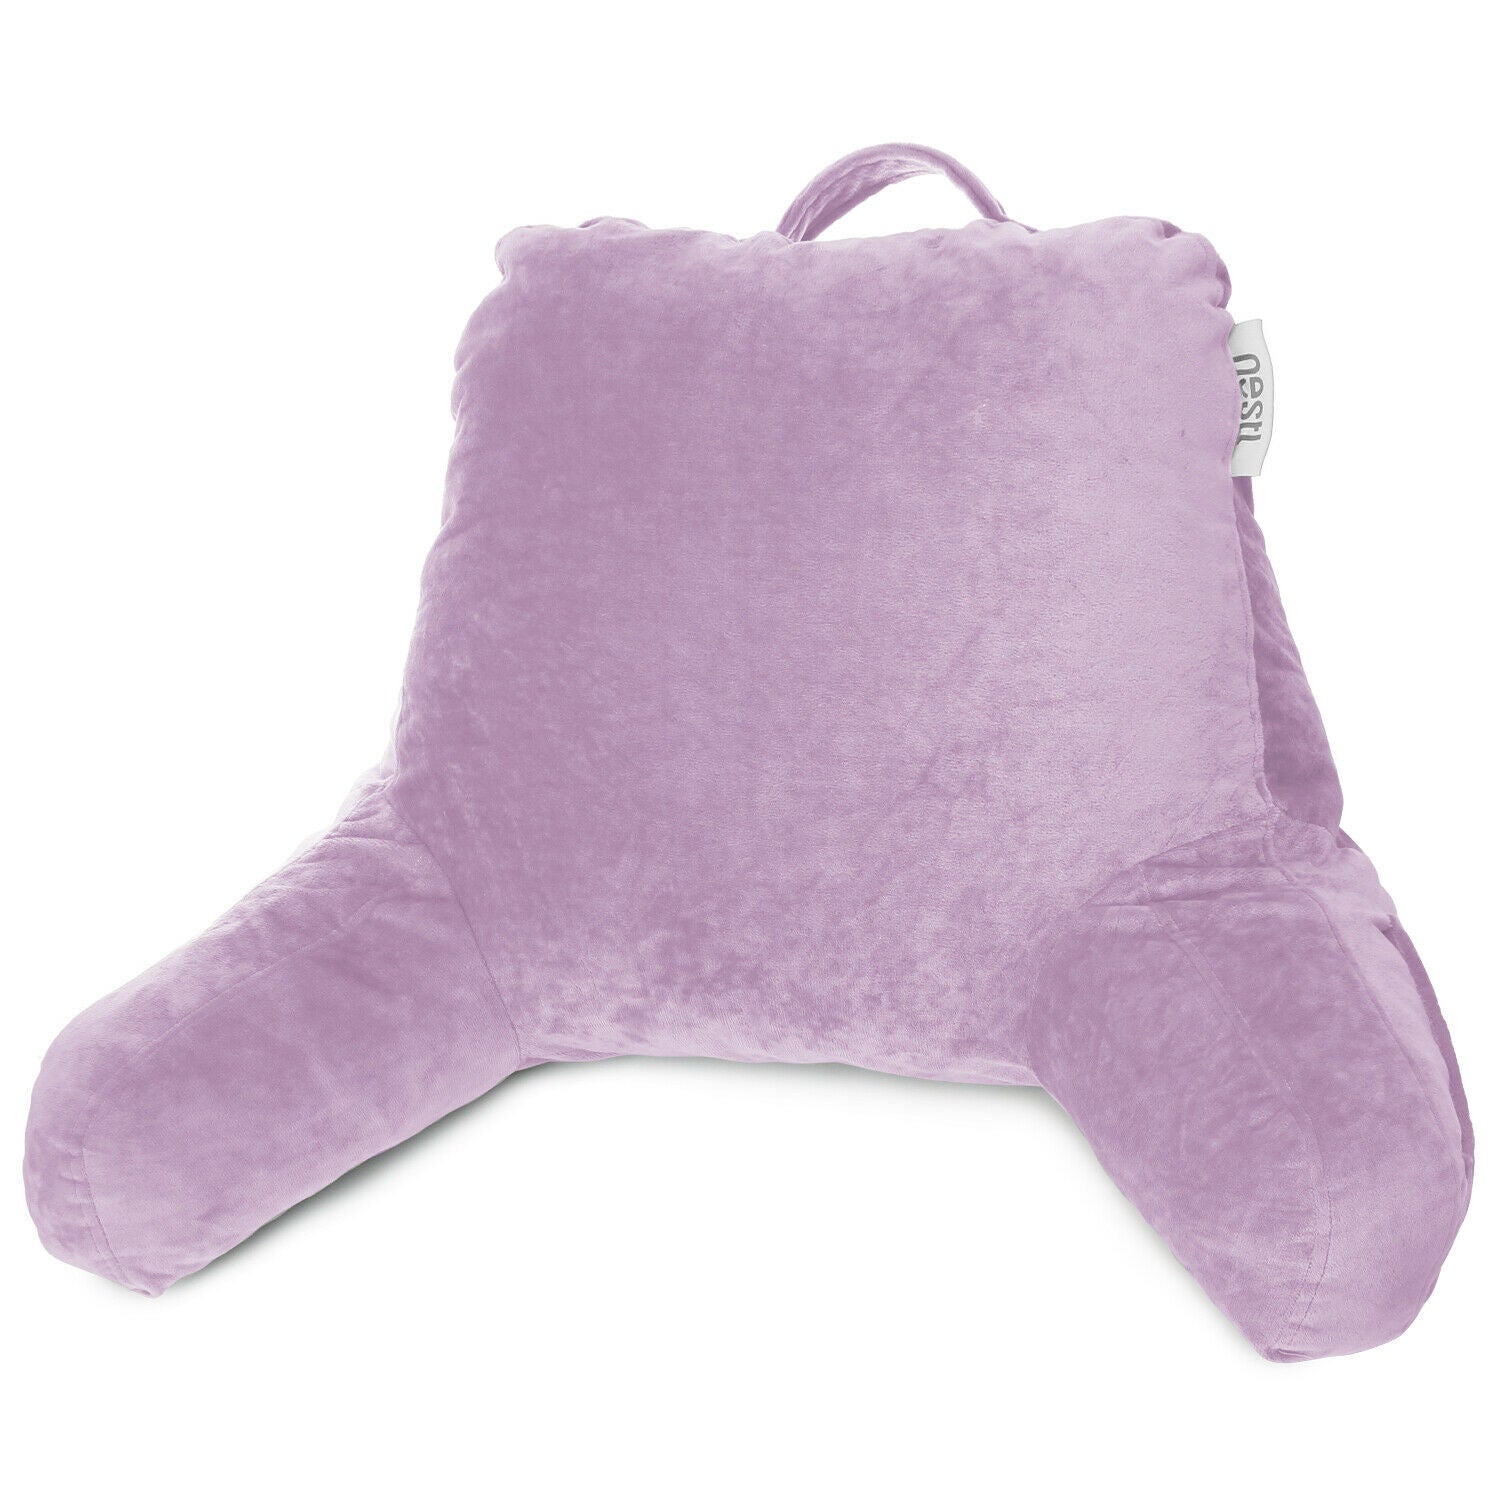 Pillows - TV & Reading Pillow - Kid's Memory Foam Bedrest Back Pillow 12 Colors! - Light Purple